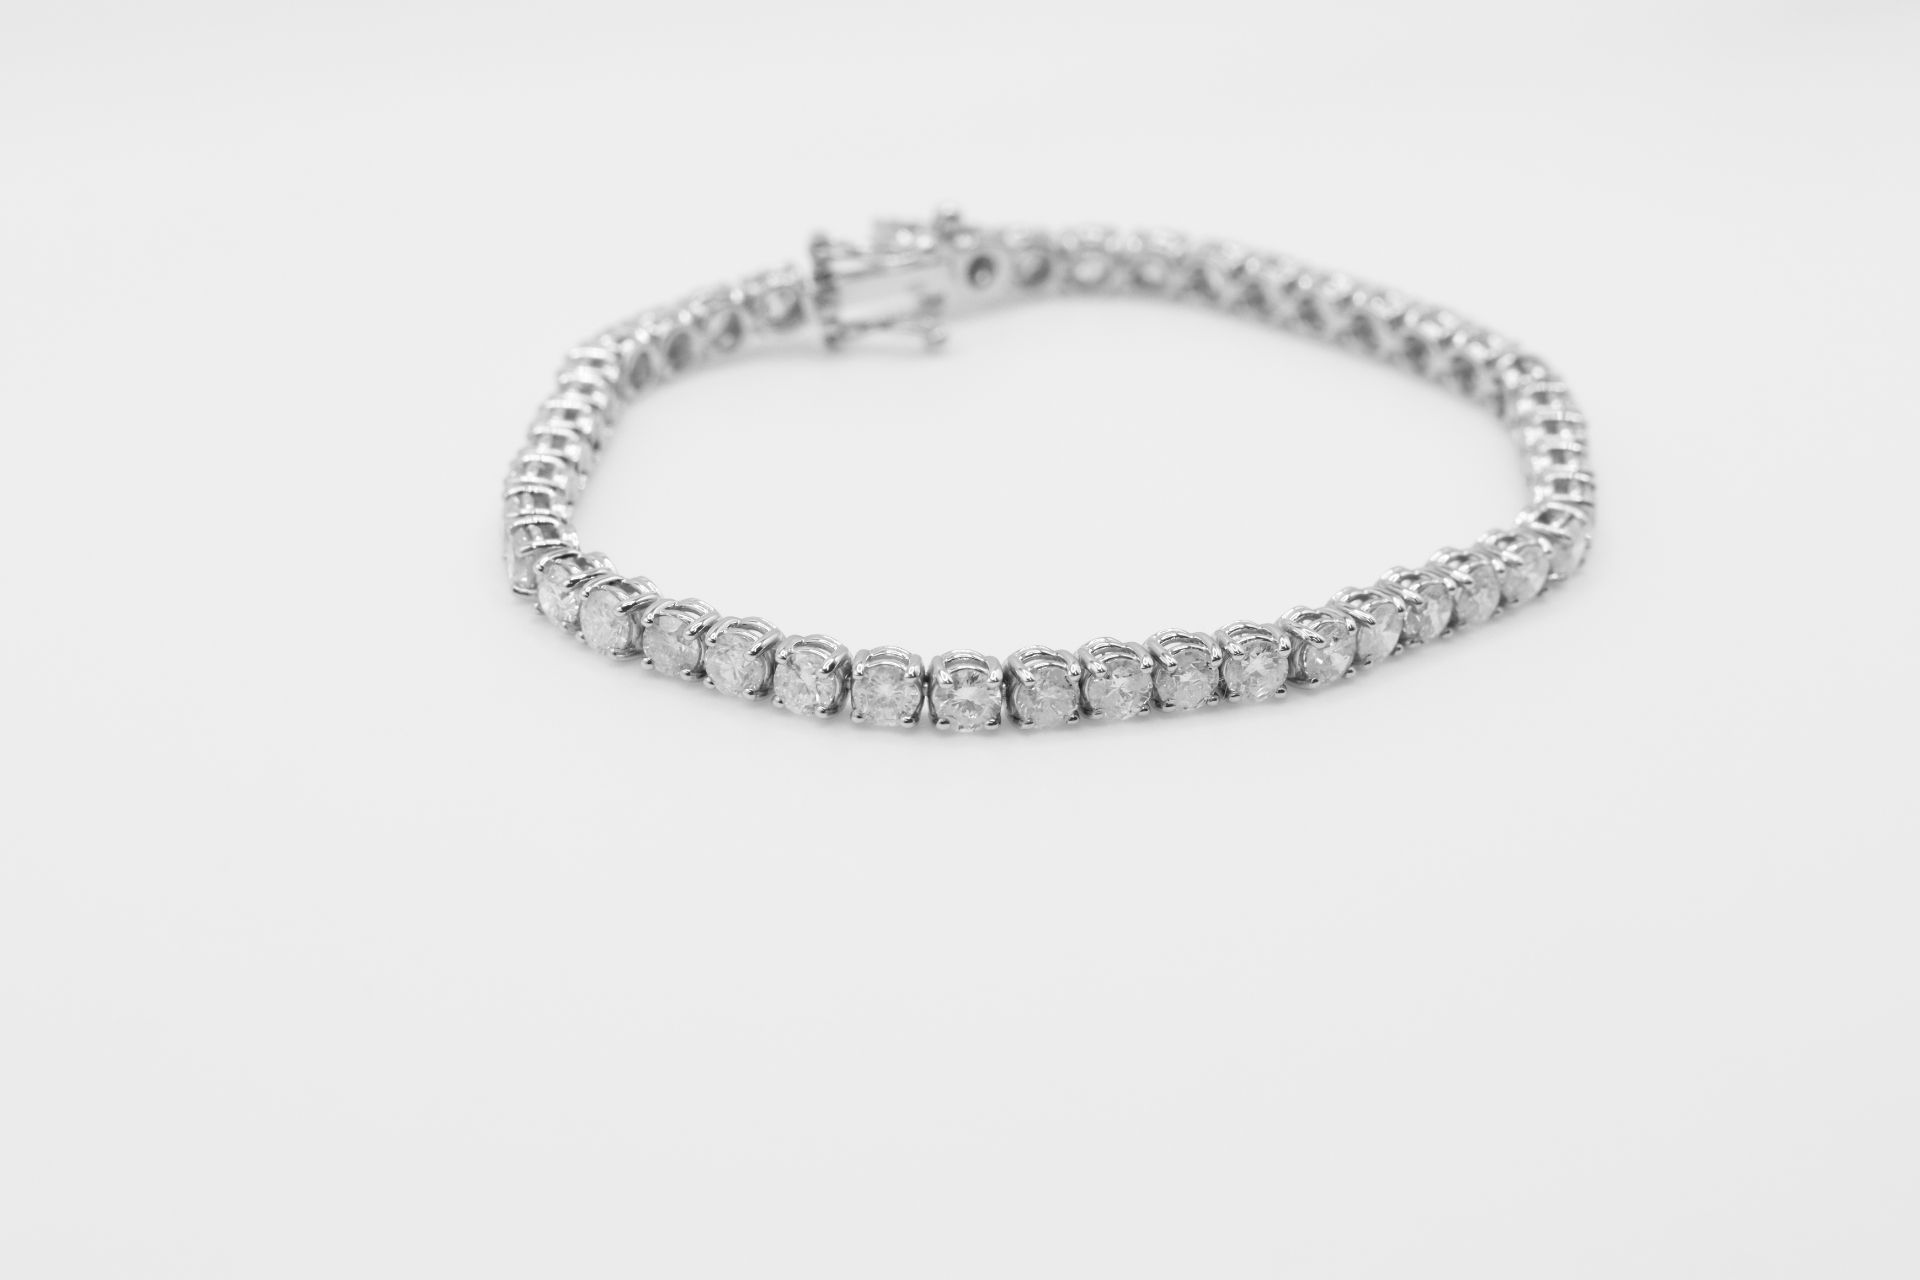 9.0 Carat 18ct White Gold Tennis Bracelet set with Round Brilliant Cut Natural Diamonds - Image 11 of 17